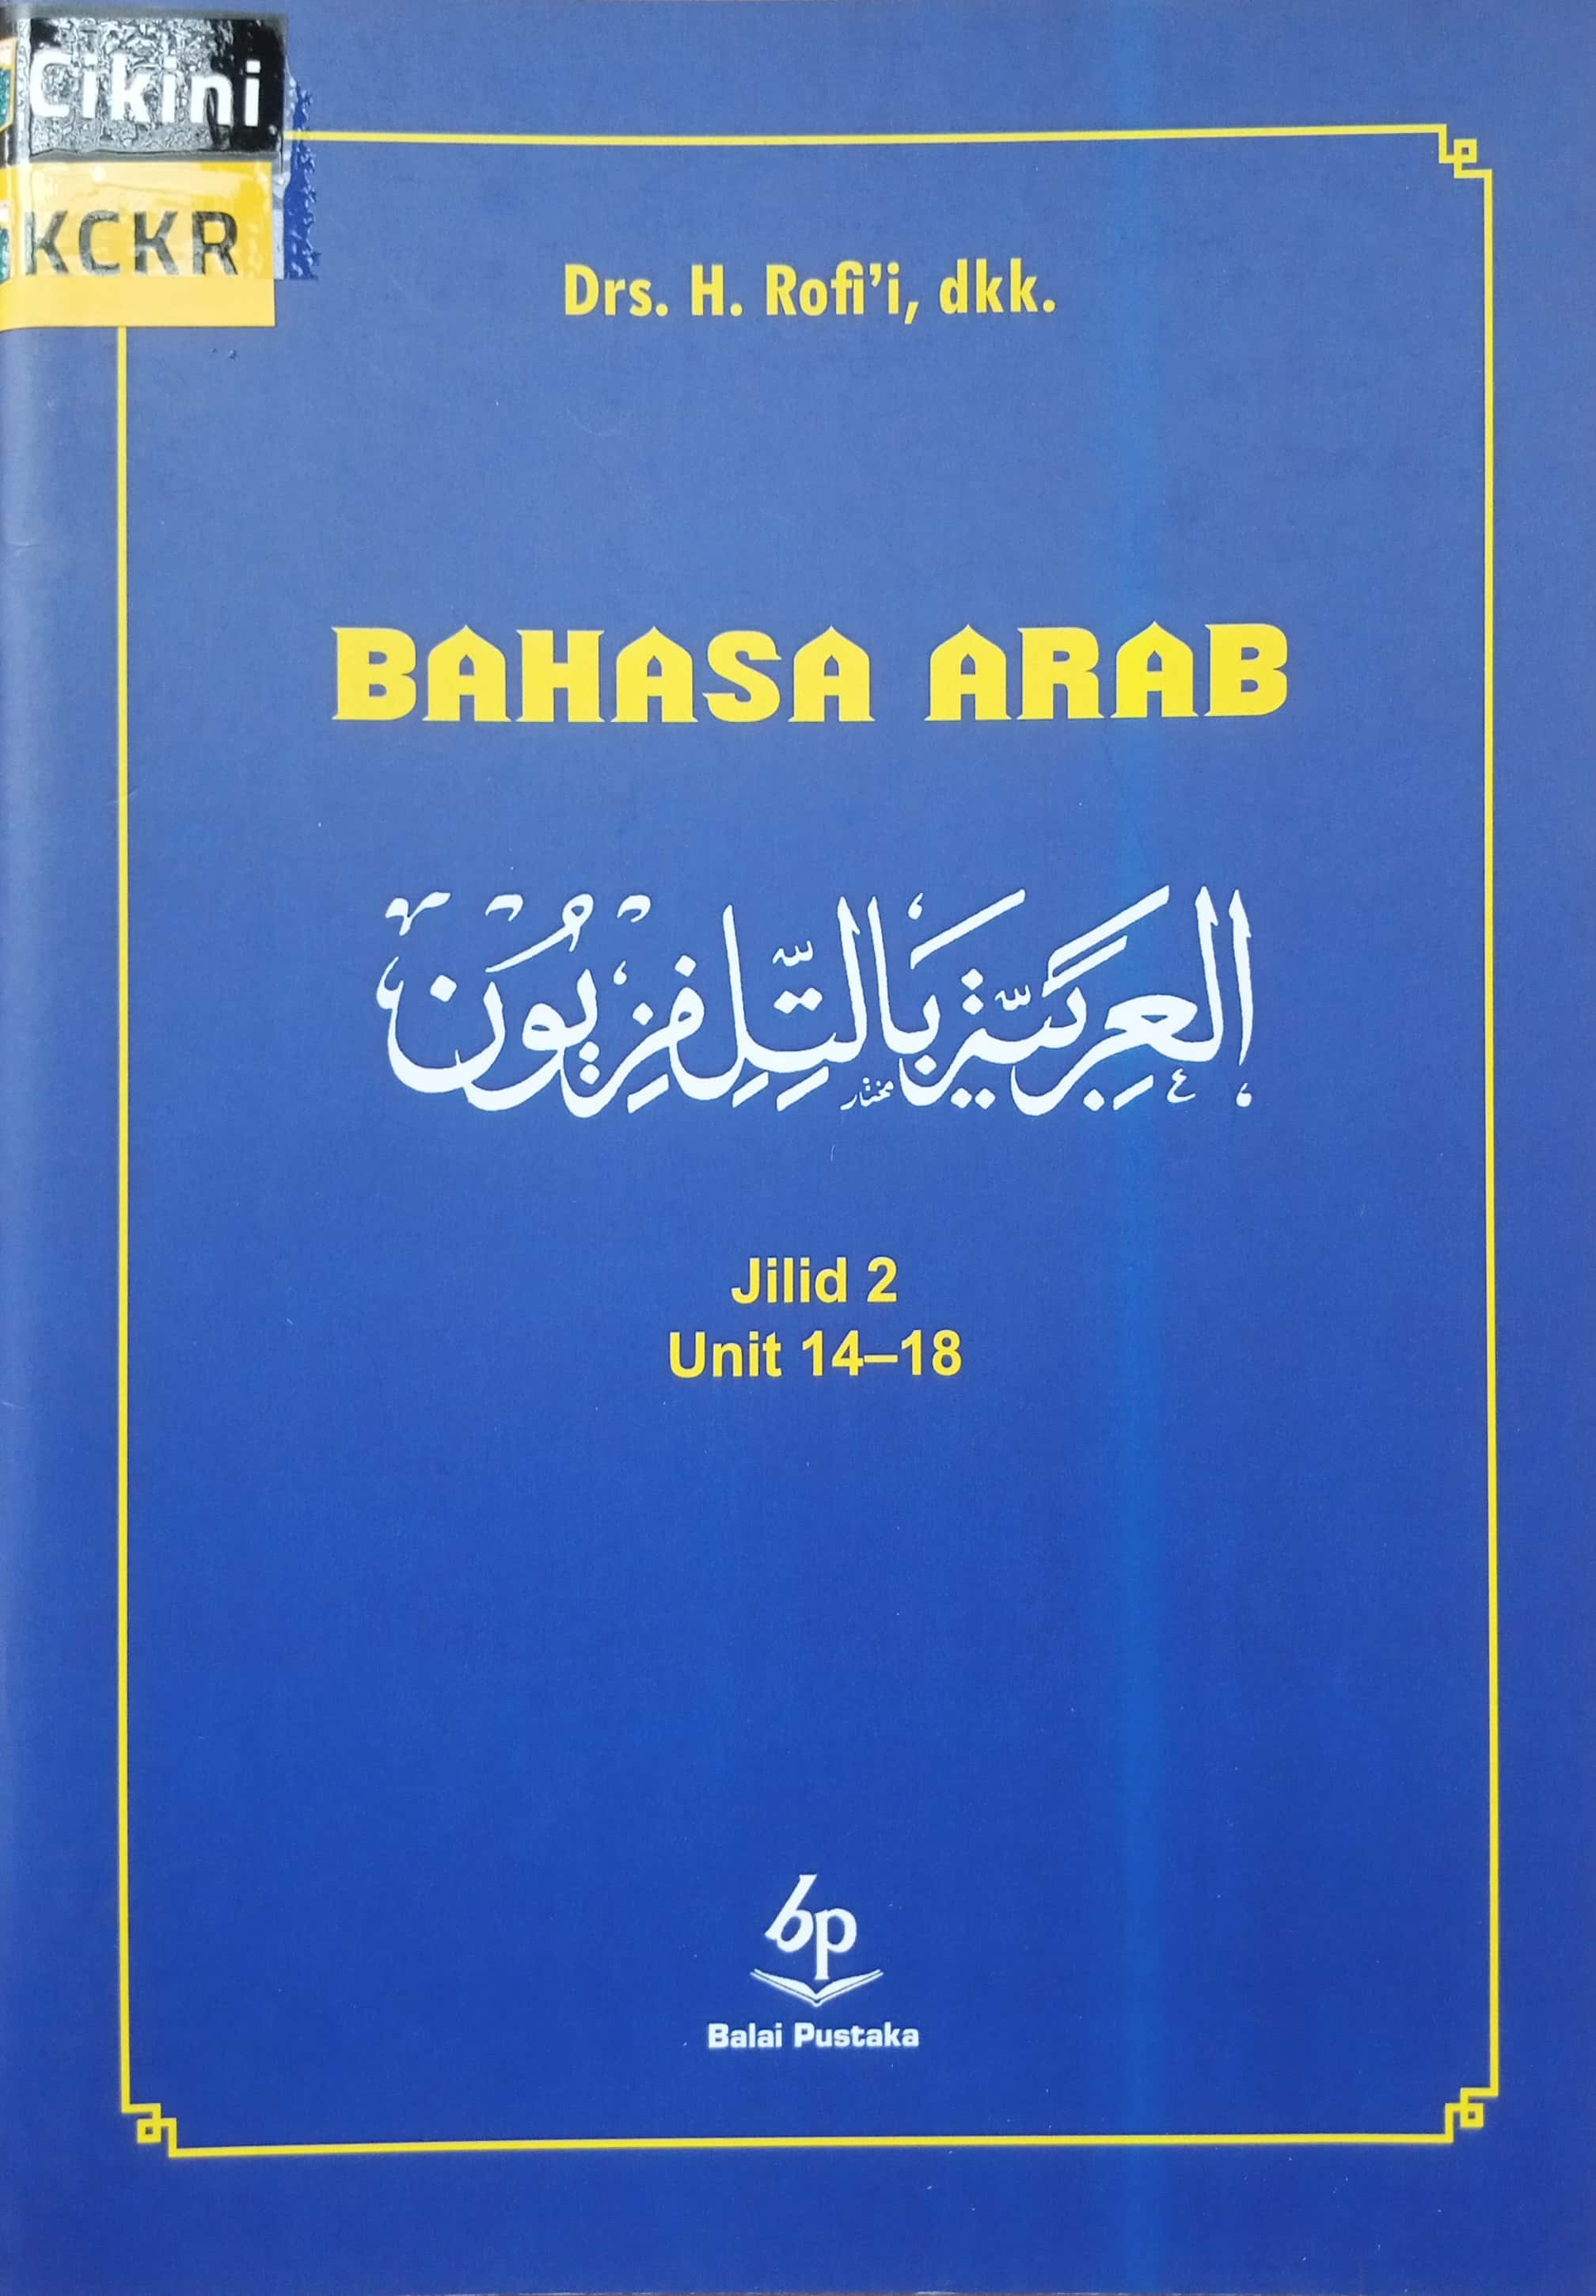 Bahasa Arab jilid 2 unit 14-18